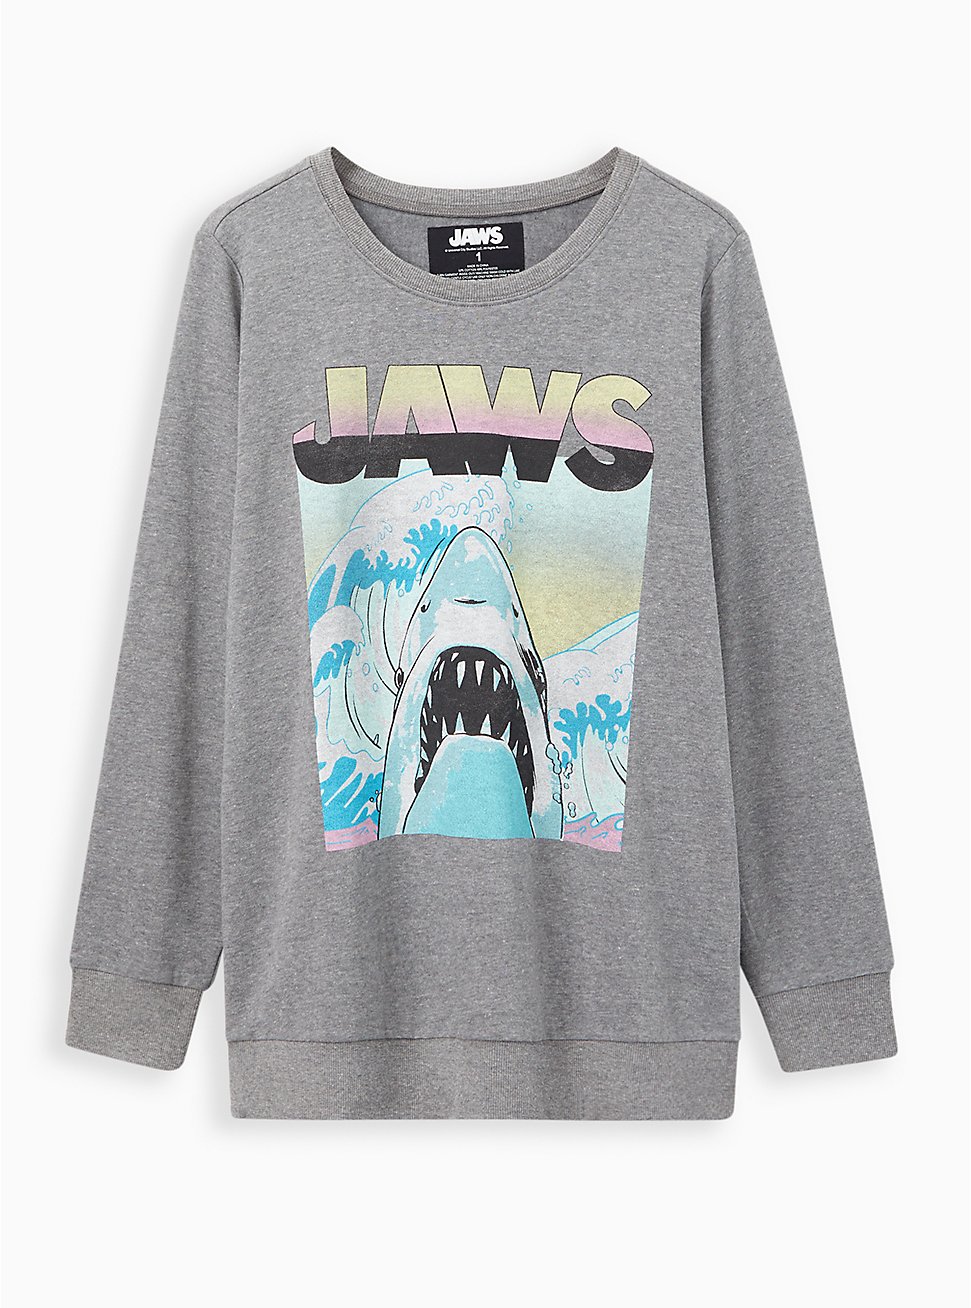 Plus Size Sweatshirt - Cozy Fleece Jaws Grey, MEDIUM HEATHER GREY, hi-res